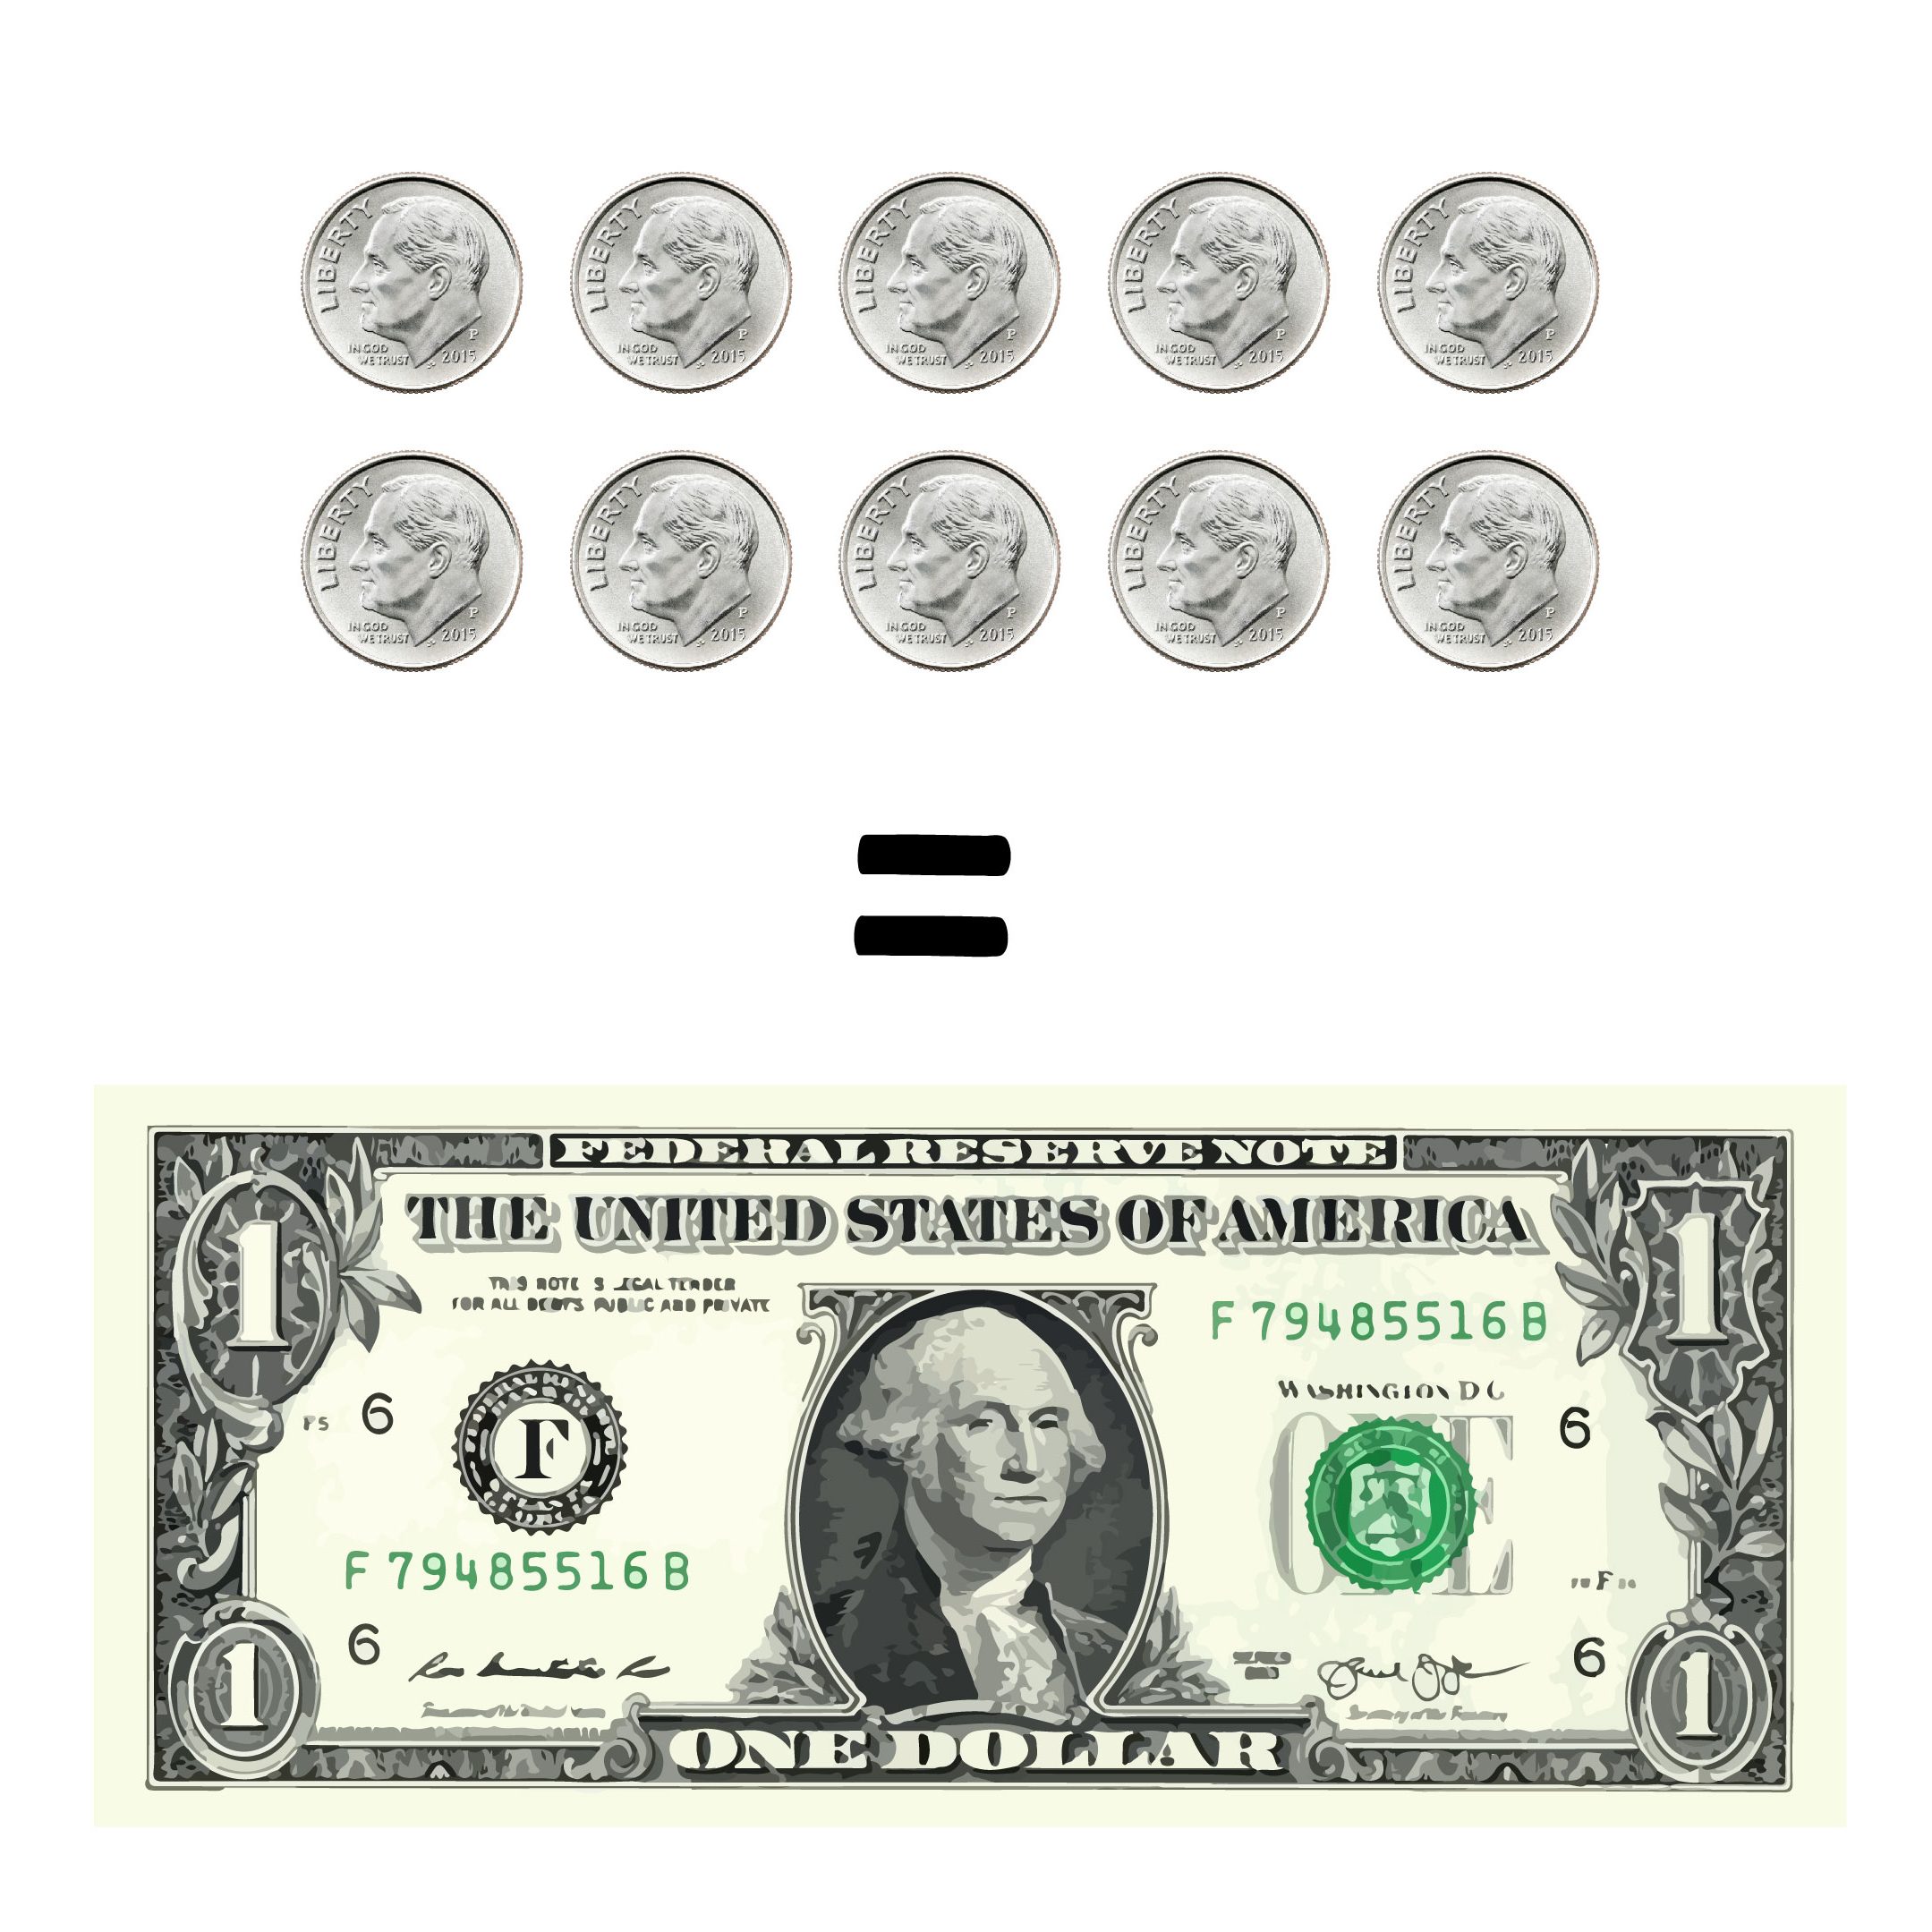 Ten dimes equals one dollar